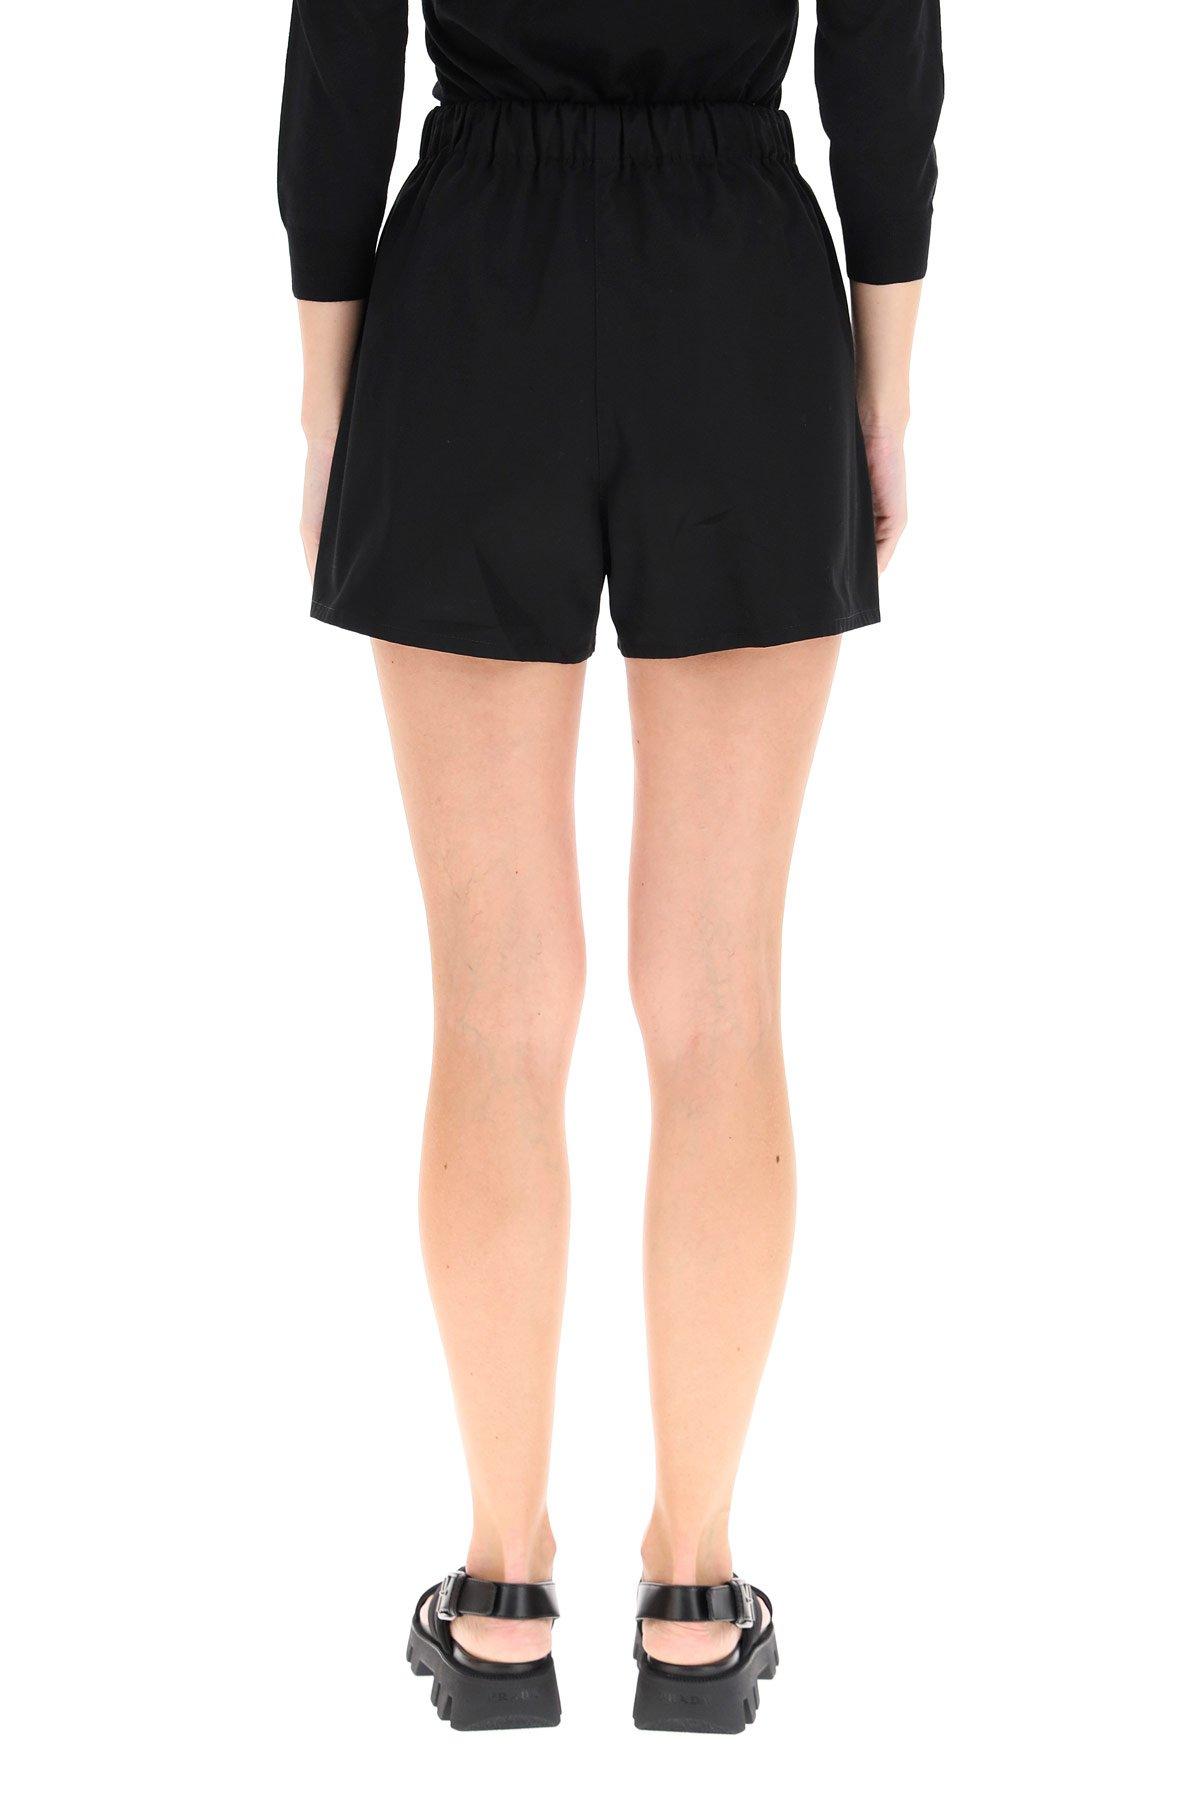 Prada Cotton Logo Patch Shorts in Black - Lyst